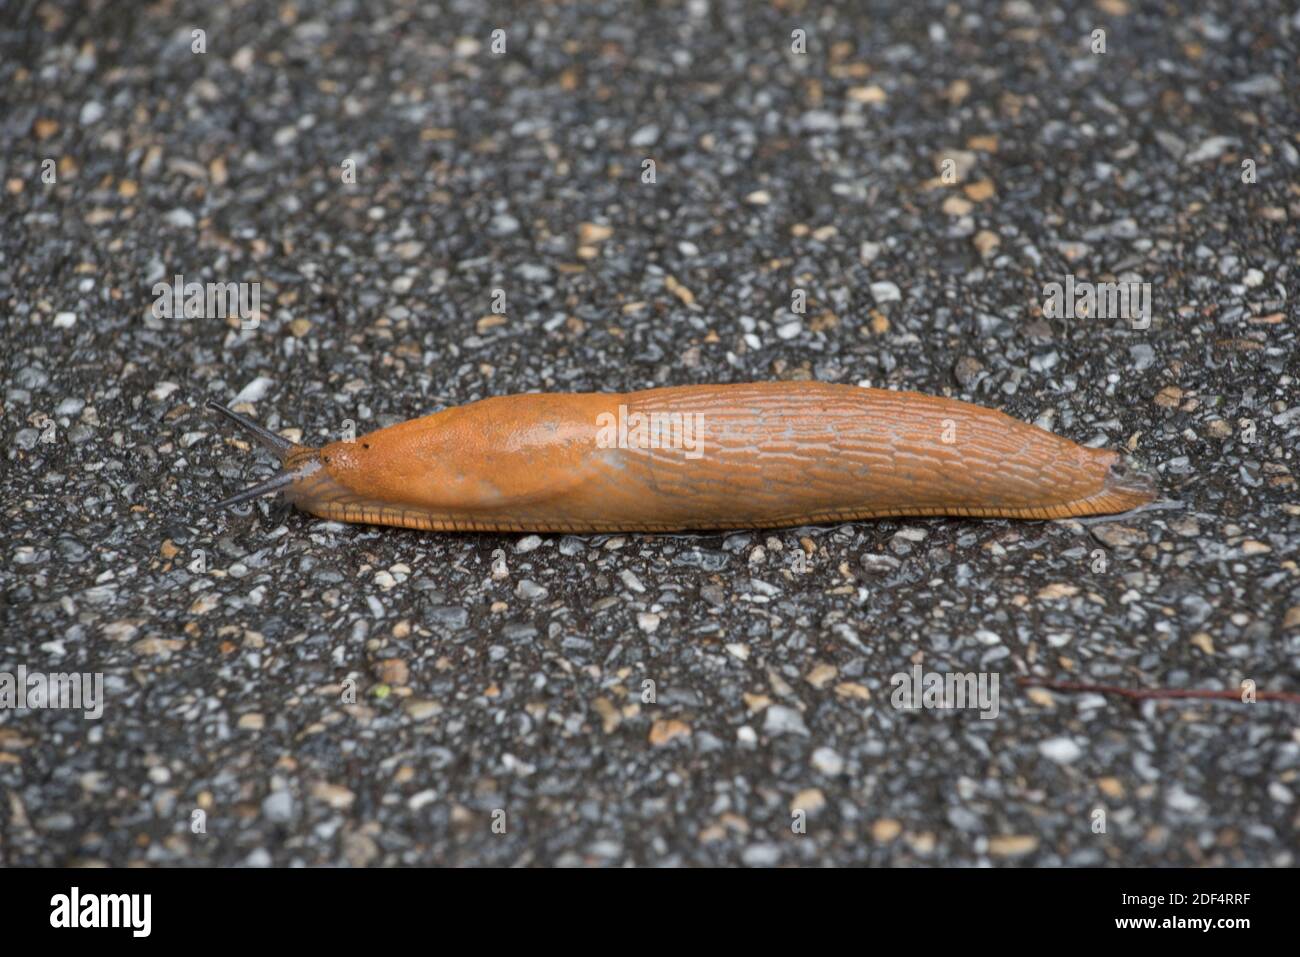 a brown spanish slug on the black asphalt after rain Stock Photo